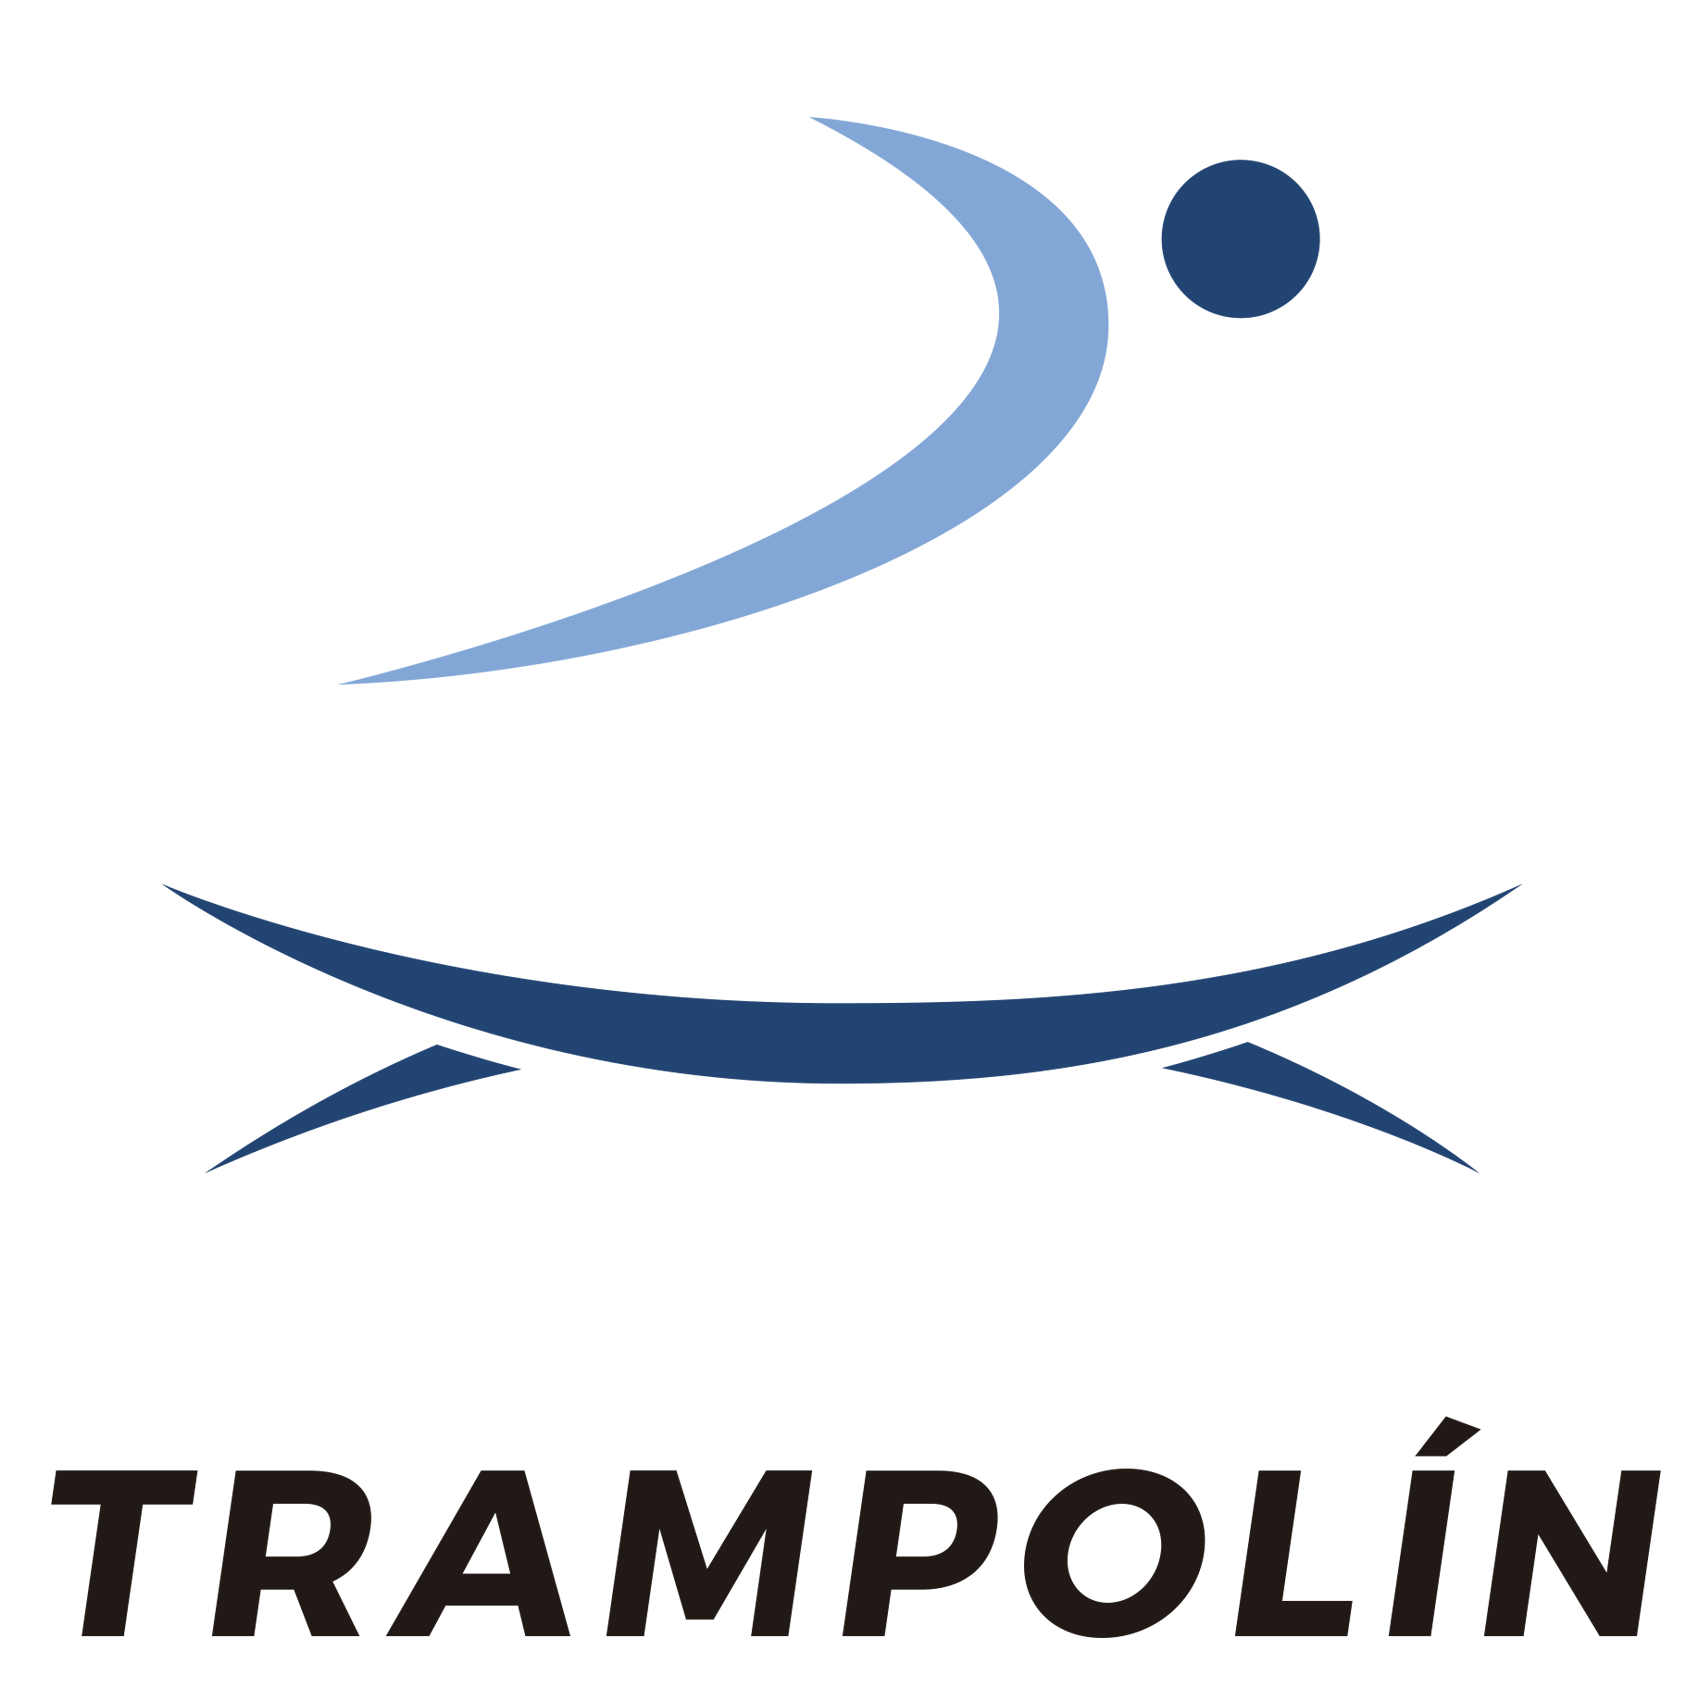 Trampolín